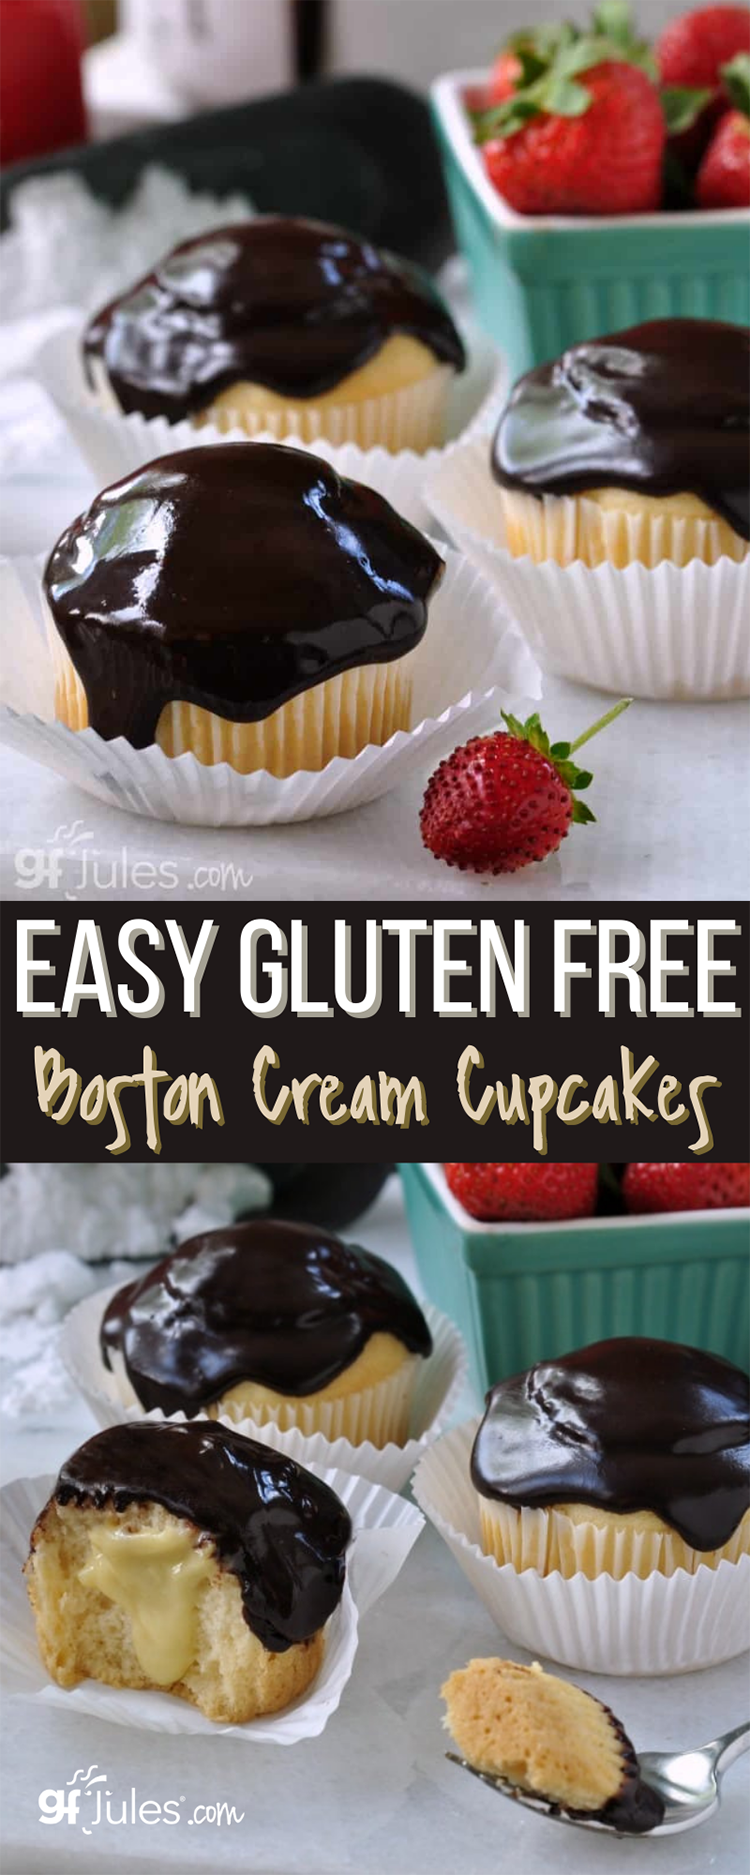 Gluten Free Boston Cream Cupcakes